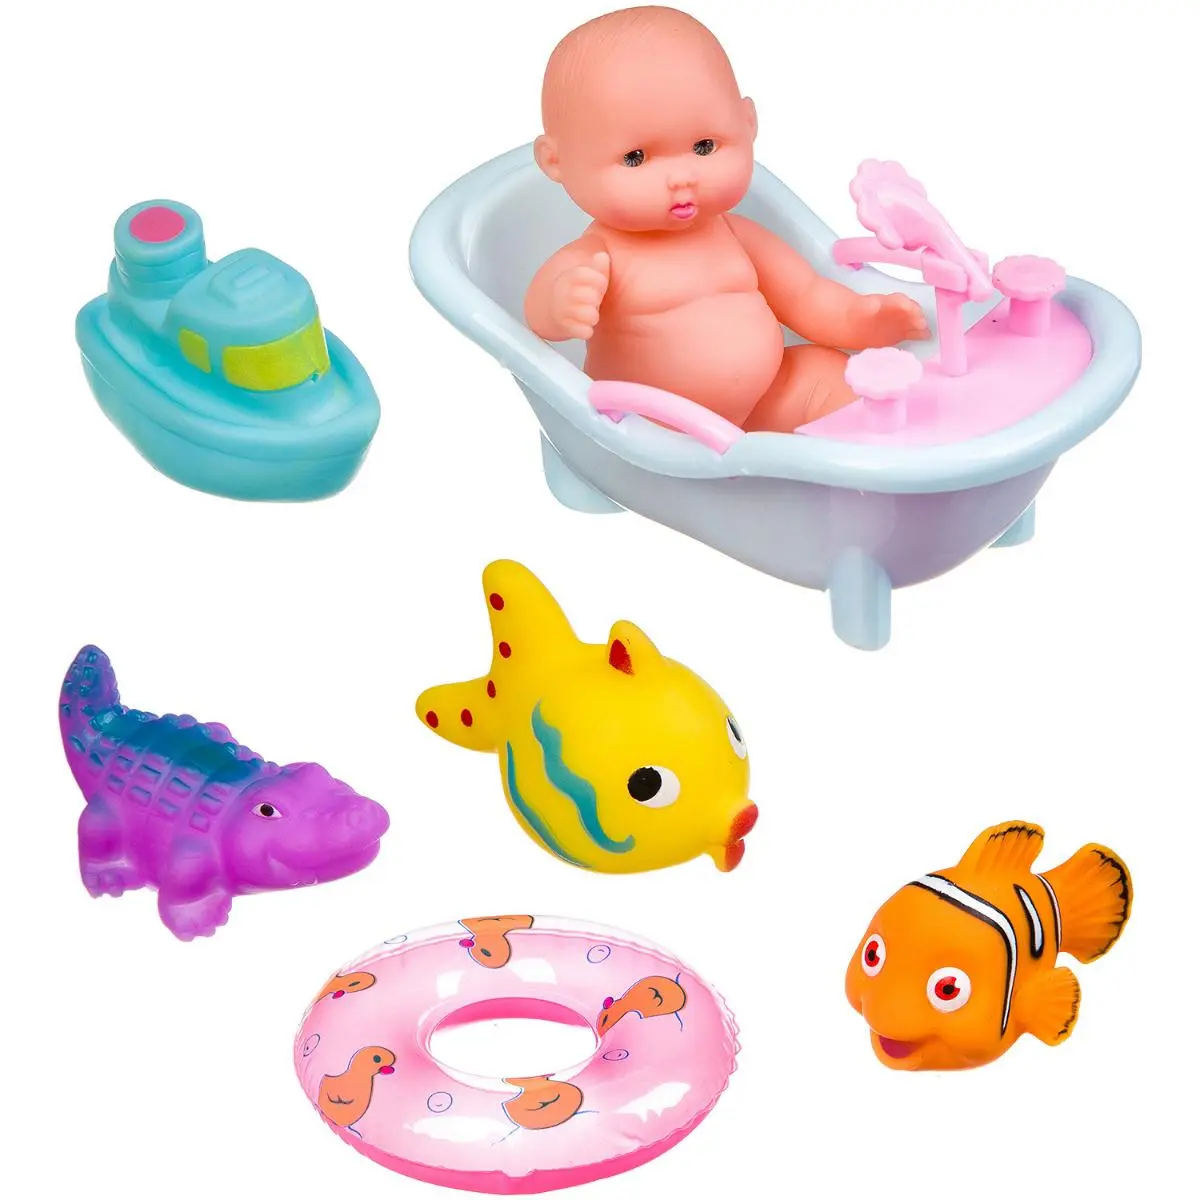 Набор игрушек для купания Пупс, ванночка, круг, рыбки, крокодил, катер - фото